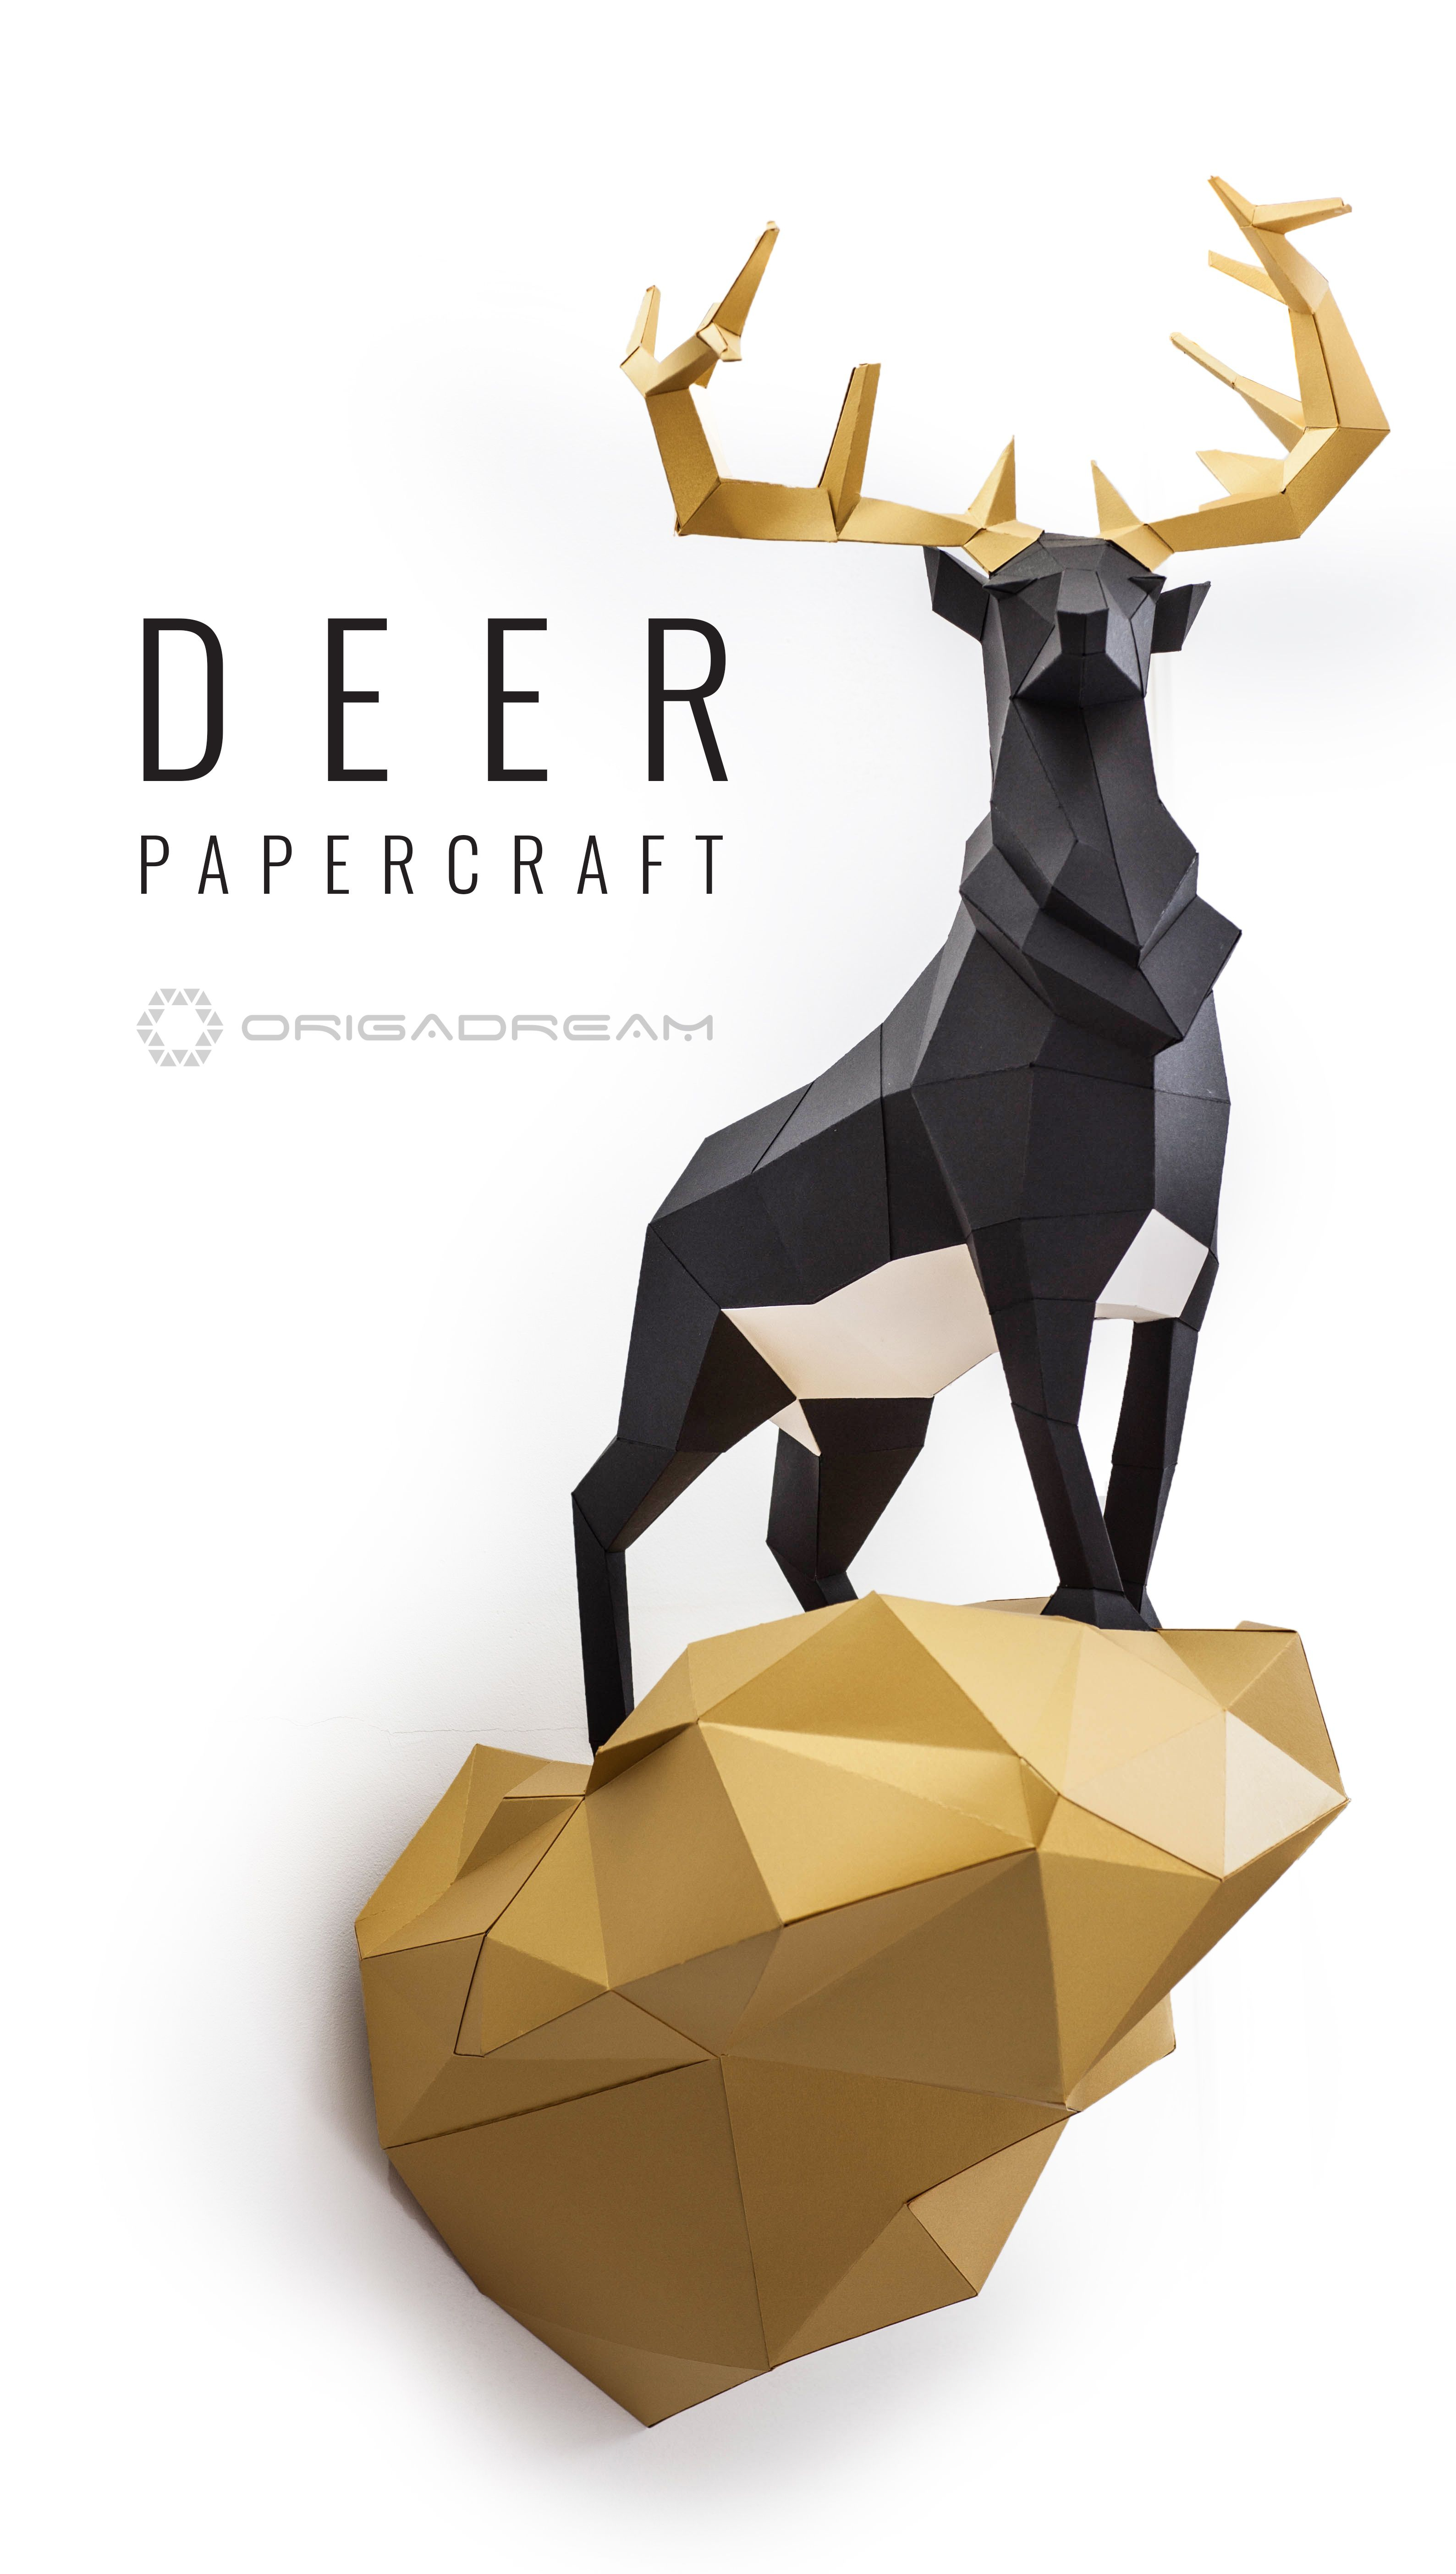 Deer #papercraft #paper #craft #diy #sculpture #decor #homedecor - Printable Origami Puzzle